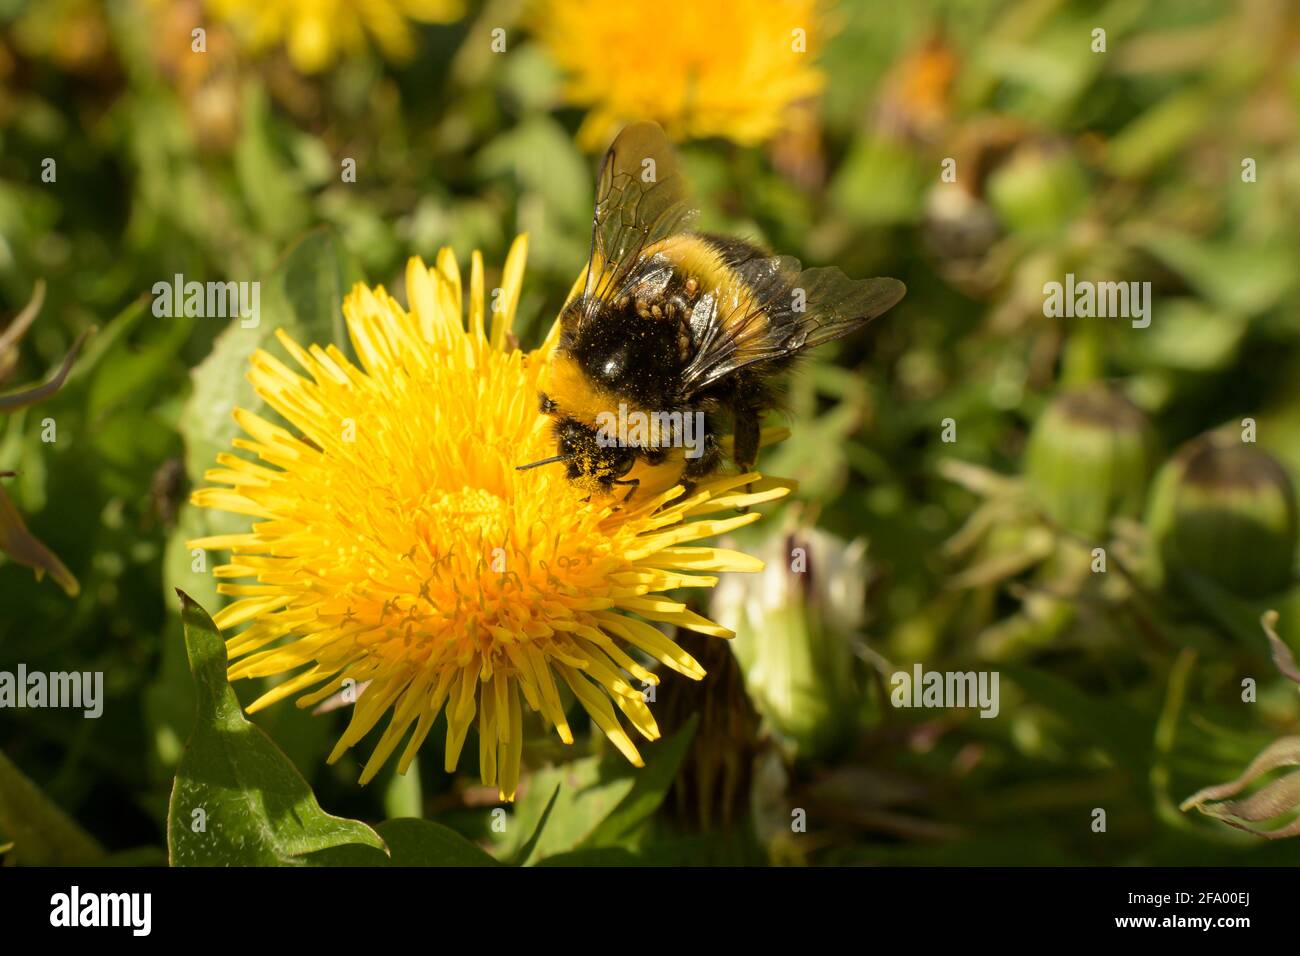 Heath Bumblebee (Bombus jonellus) with mites collecting pollen from dandelions, Iceland Stock Photo